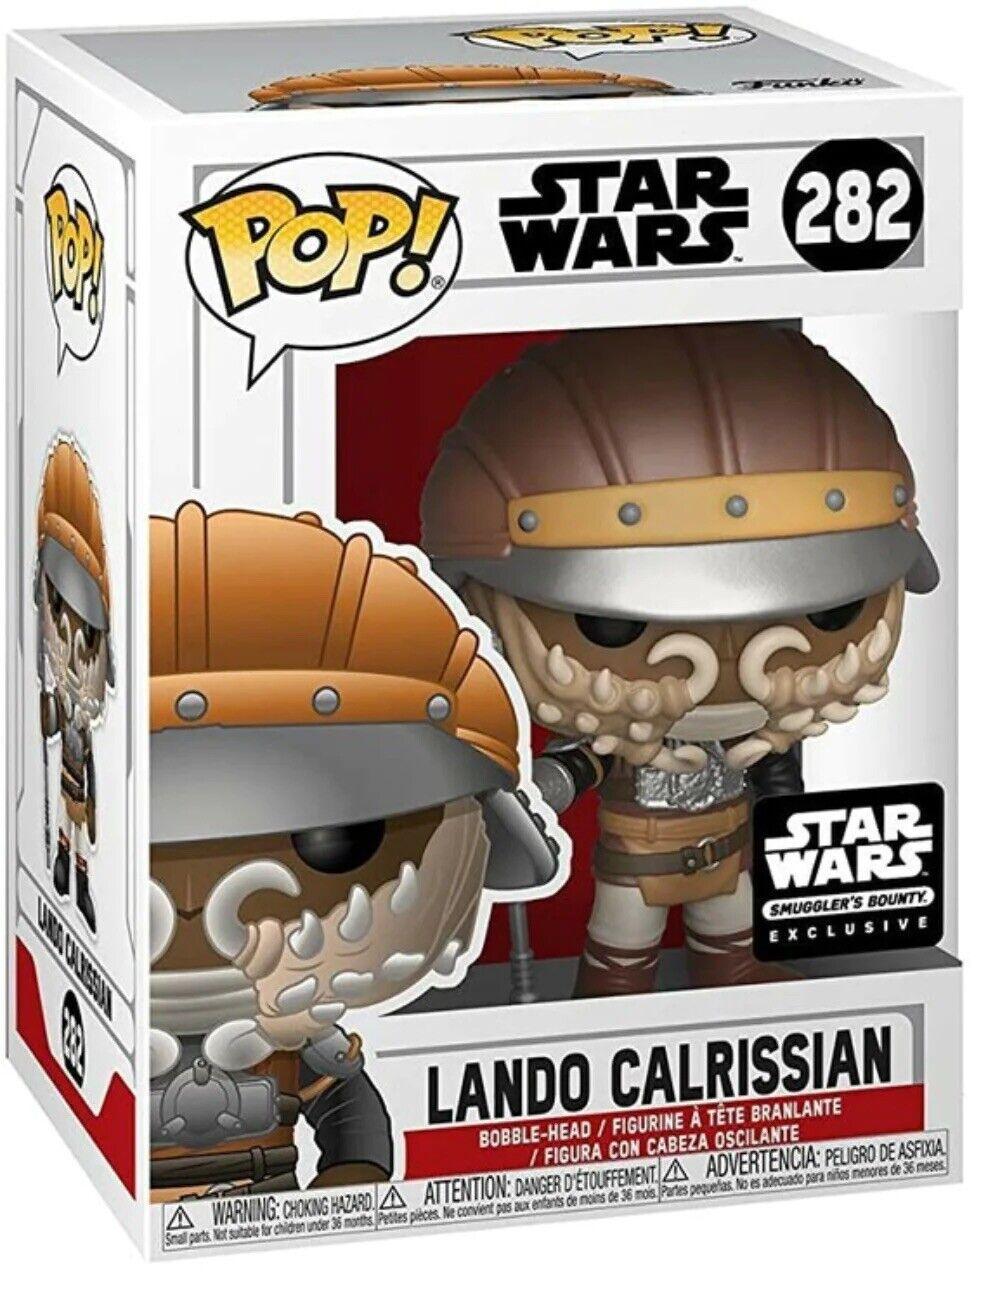 Pop! Star Wars - Lando Calrissian - #282 - EXCLUSIVE Smuggler's Bounty - Hobby Champion Inc